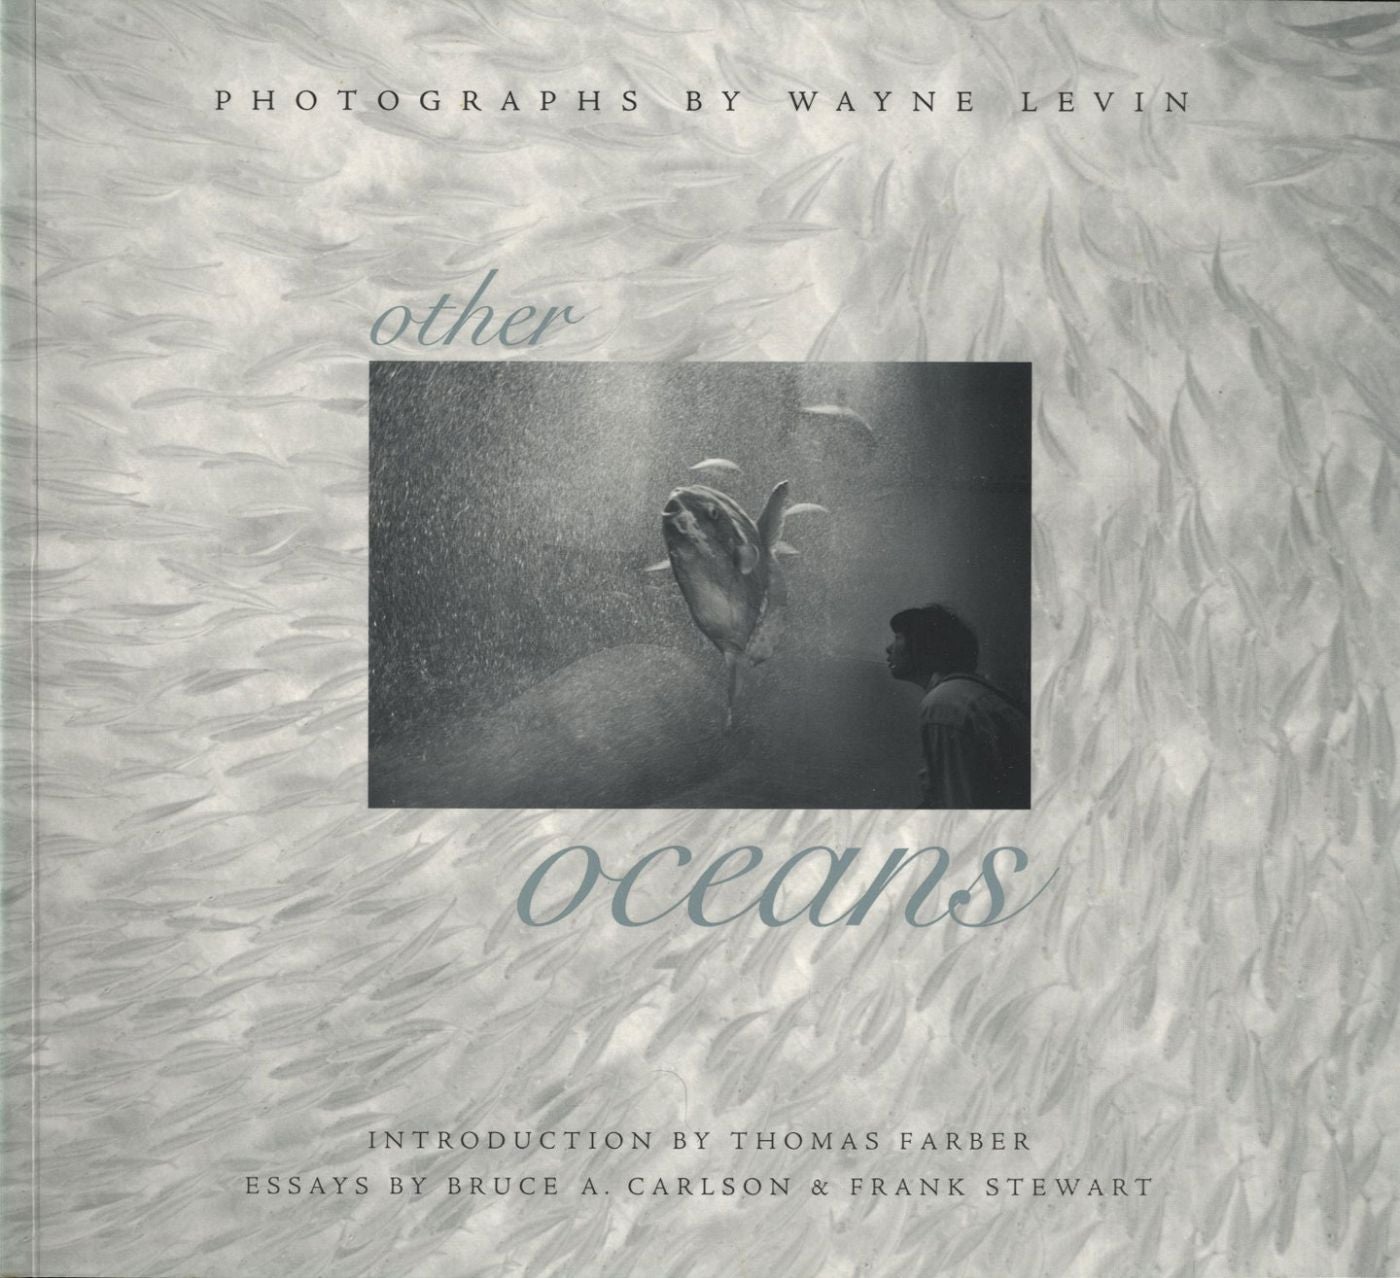 Wayne Levin: Other Oceans